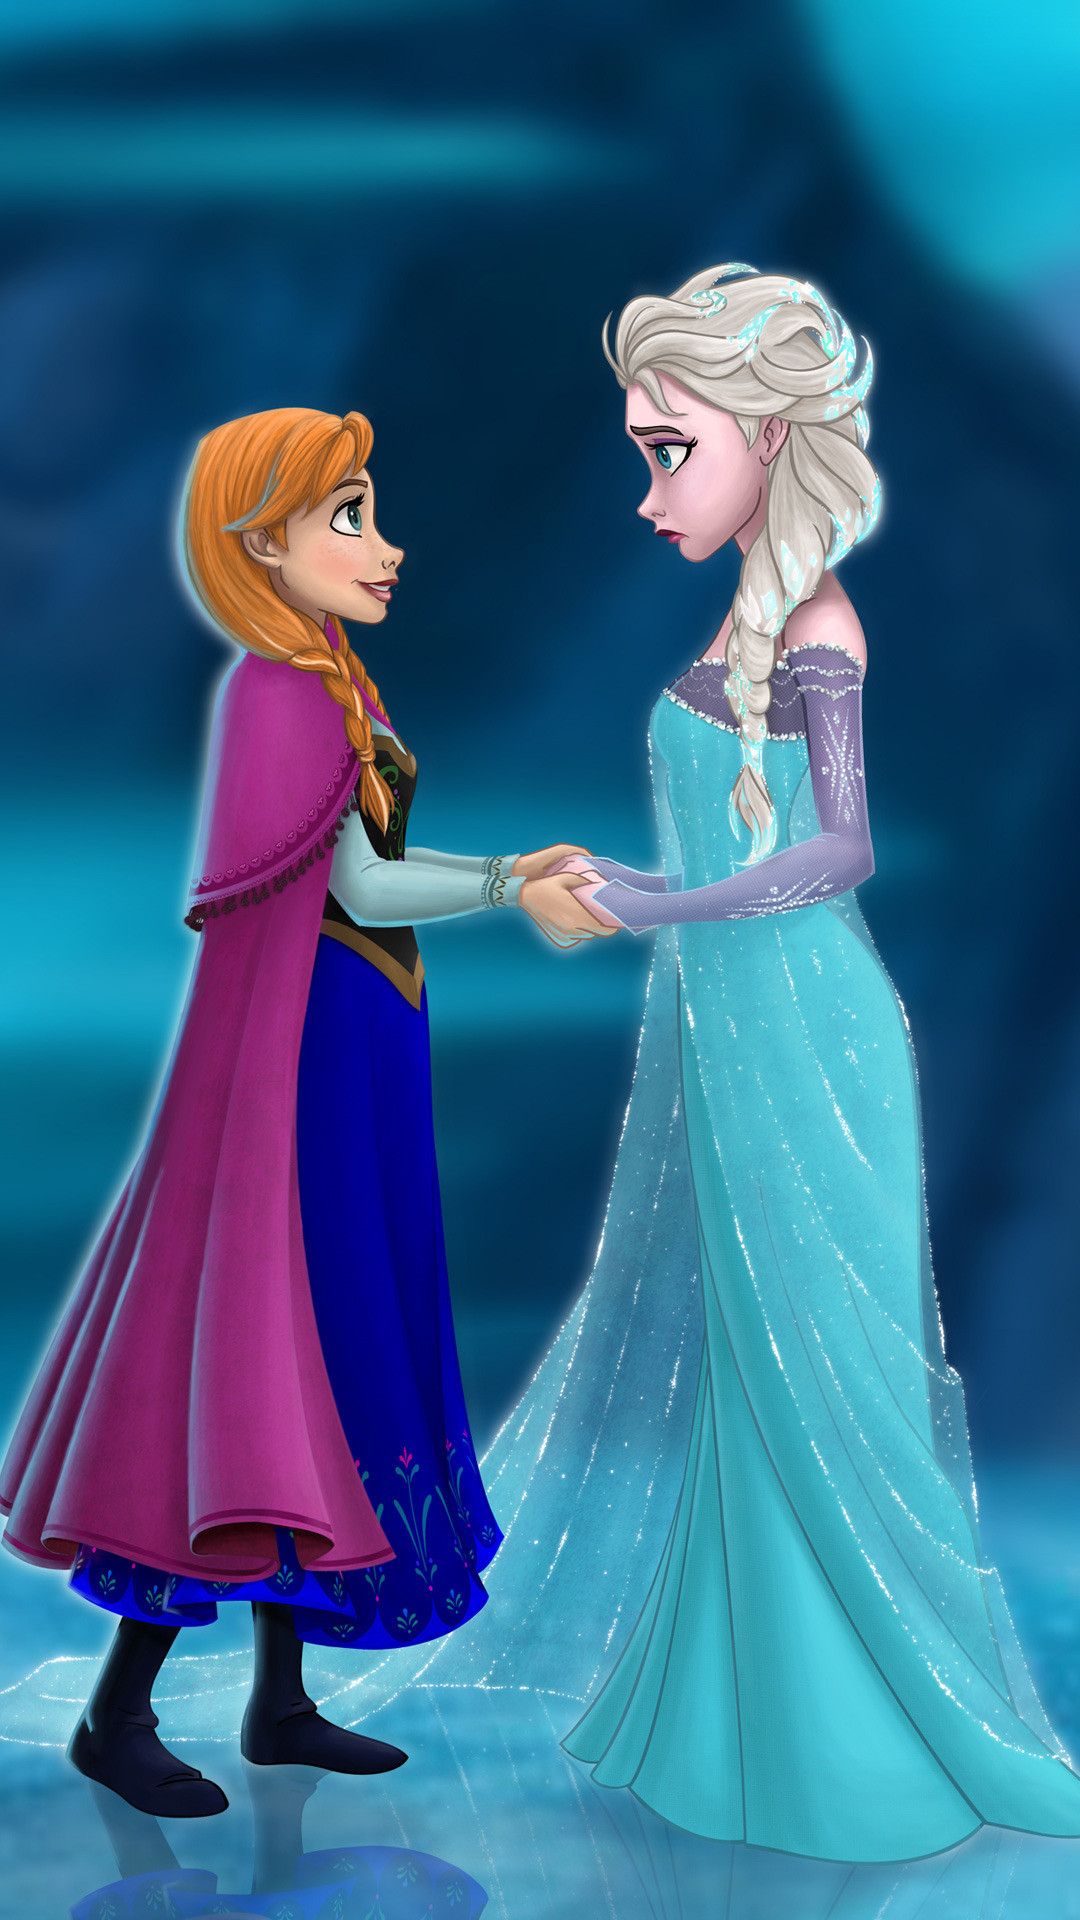 1080x1920 Anna and Elsa frozen